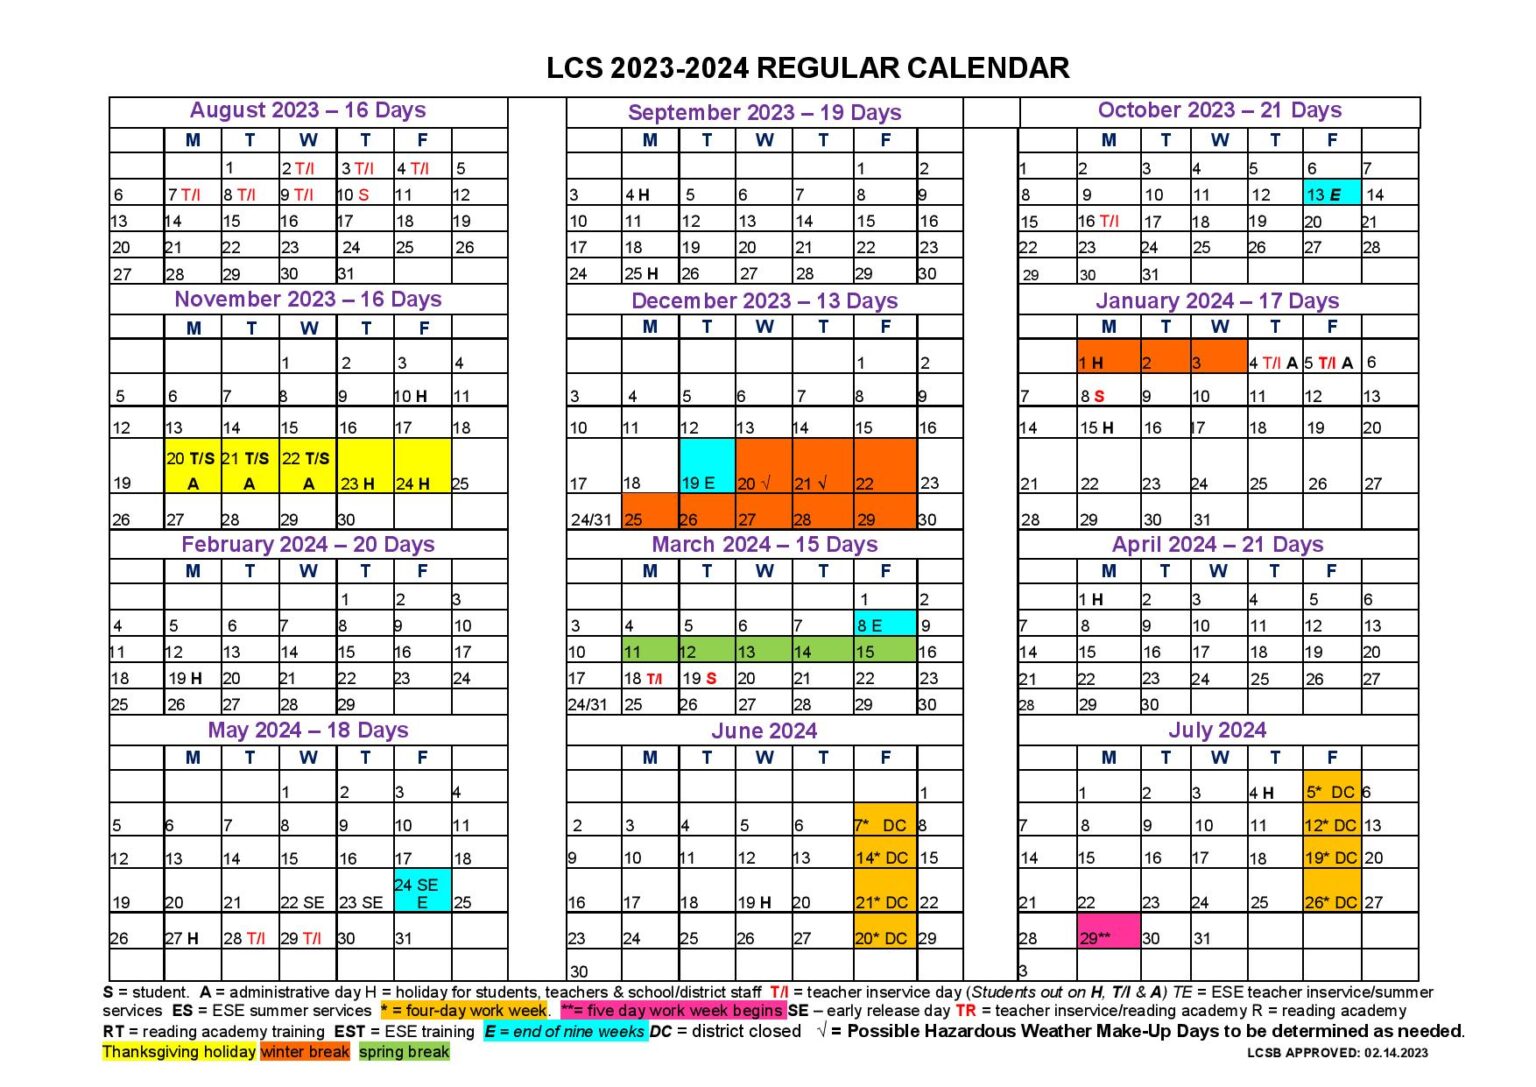 leon-county-schools-calendar-holidays-2023-2024